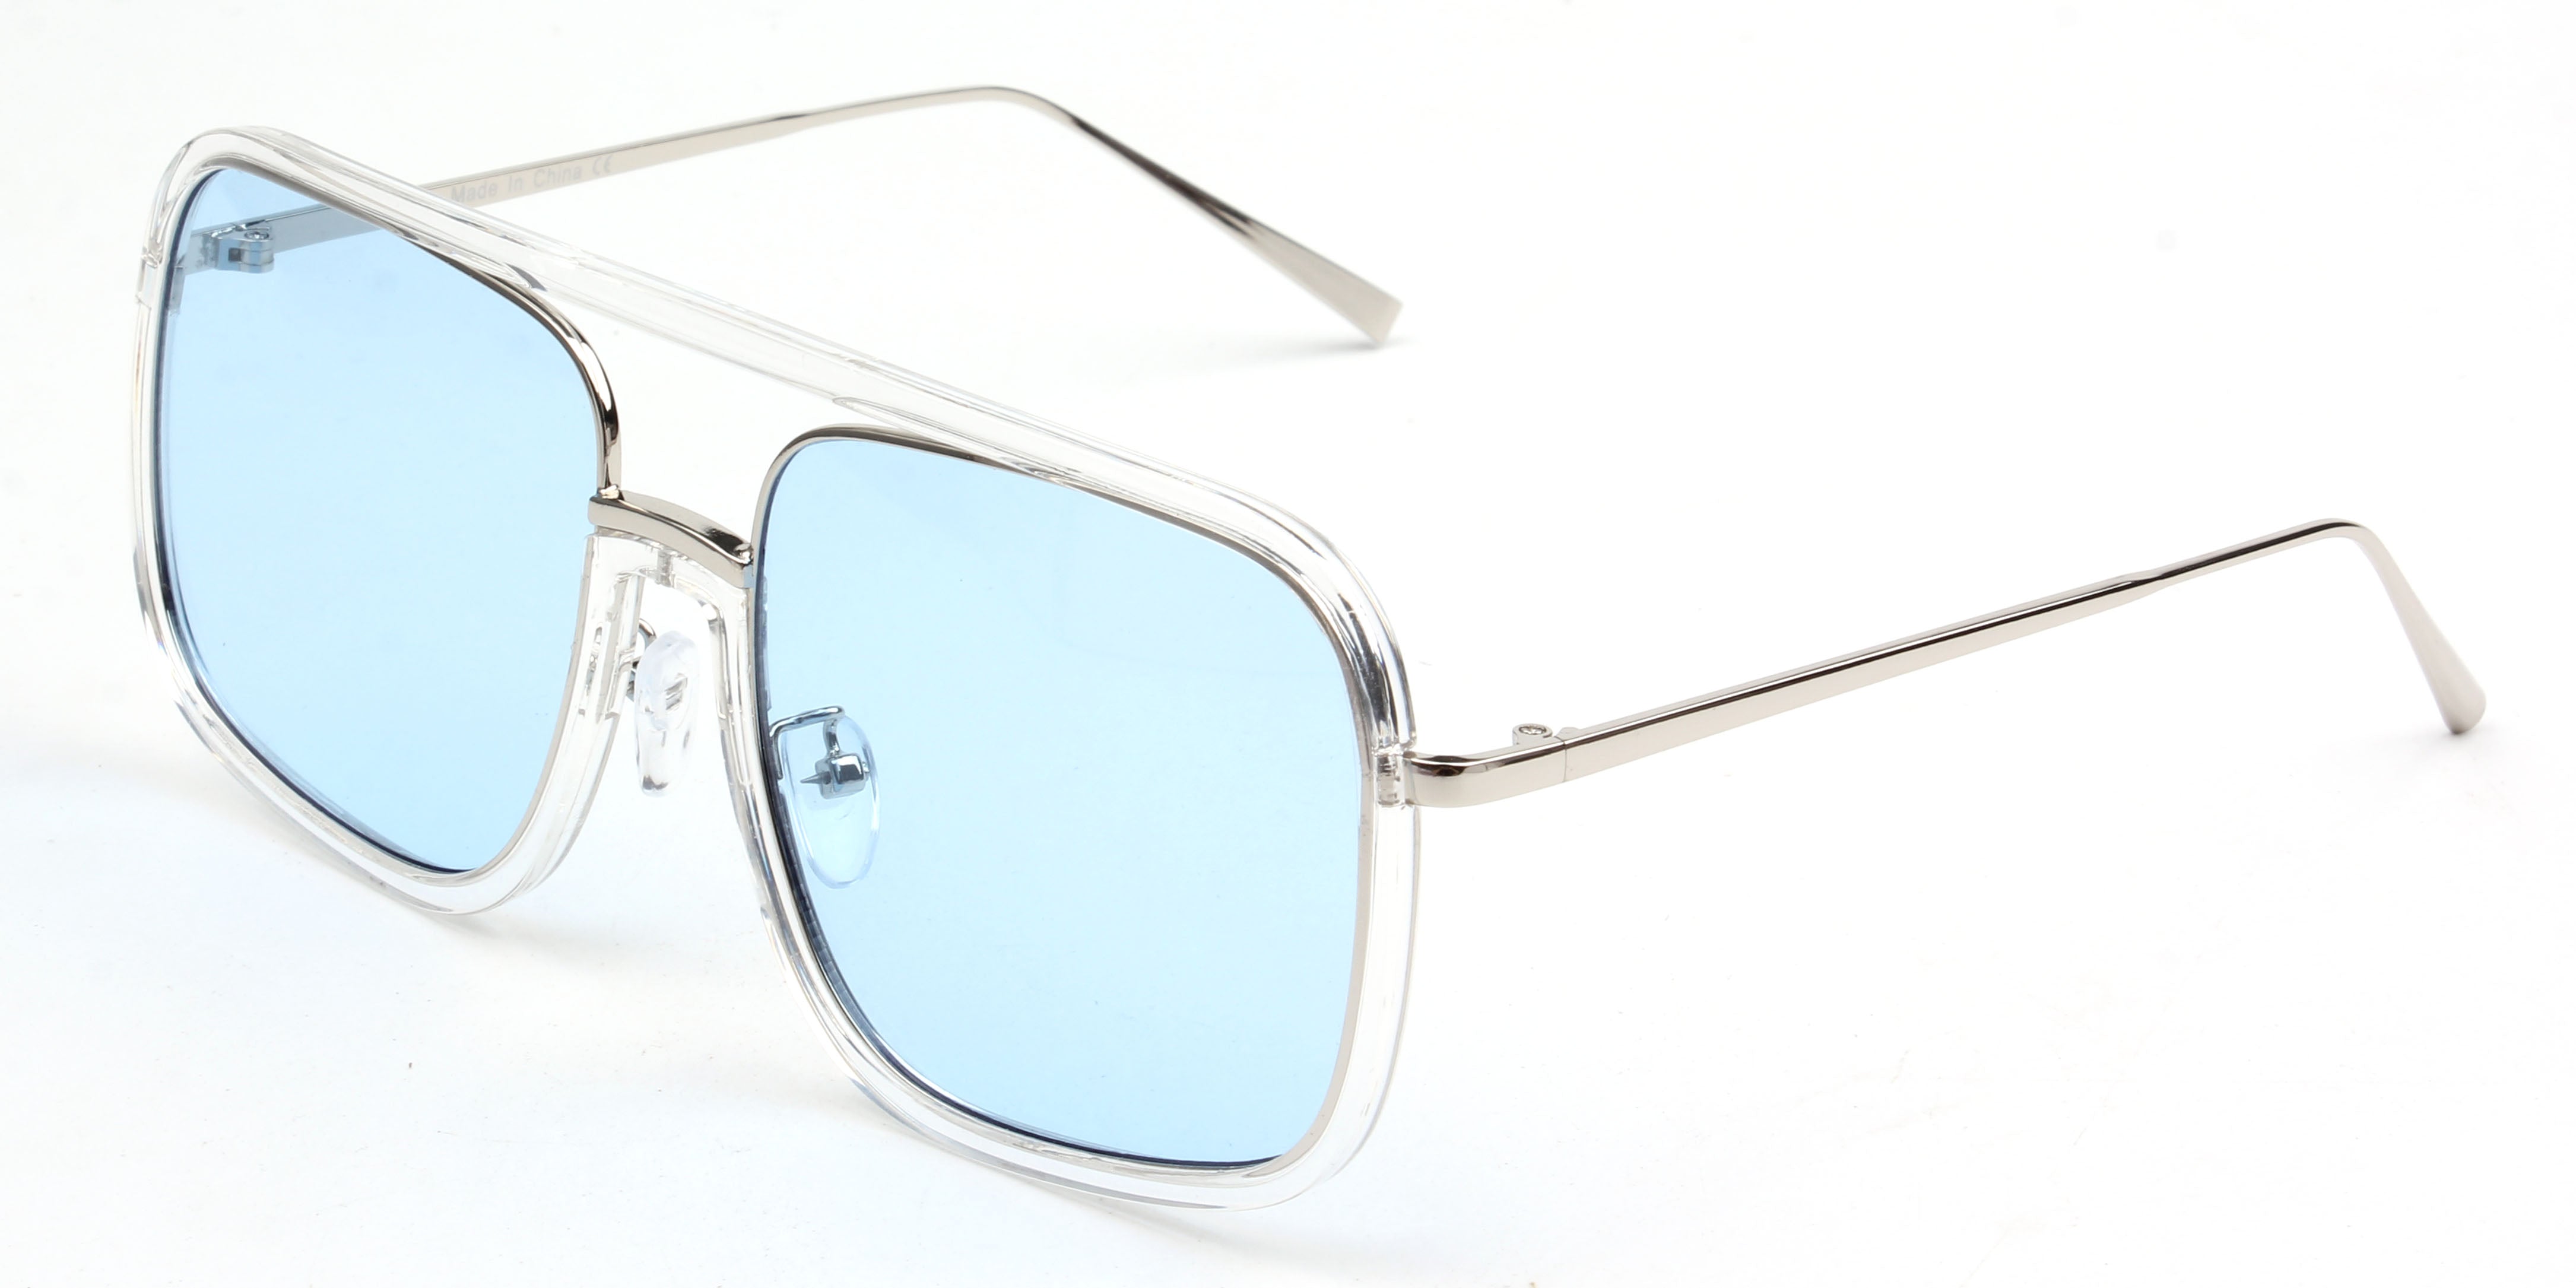 S3004 - Oversize Square Fashion Sunglasses Blue